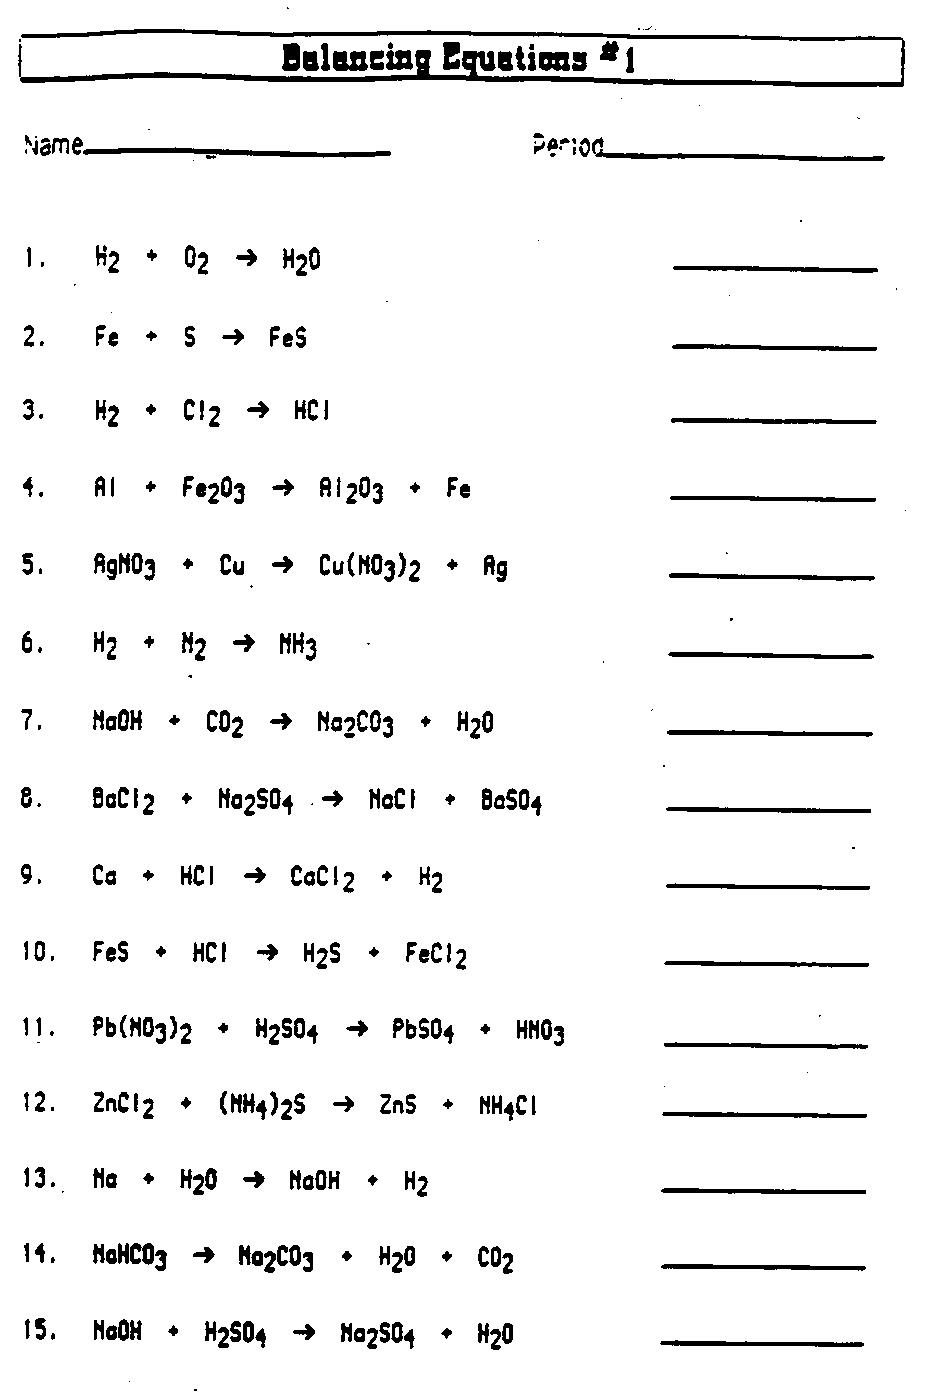 Practice Balancing Chemical Equations Worksheet Image